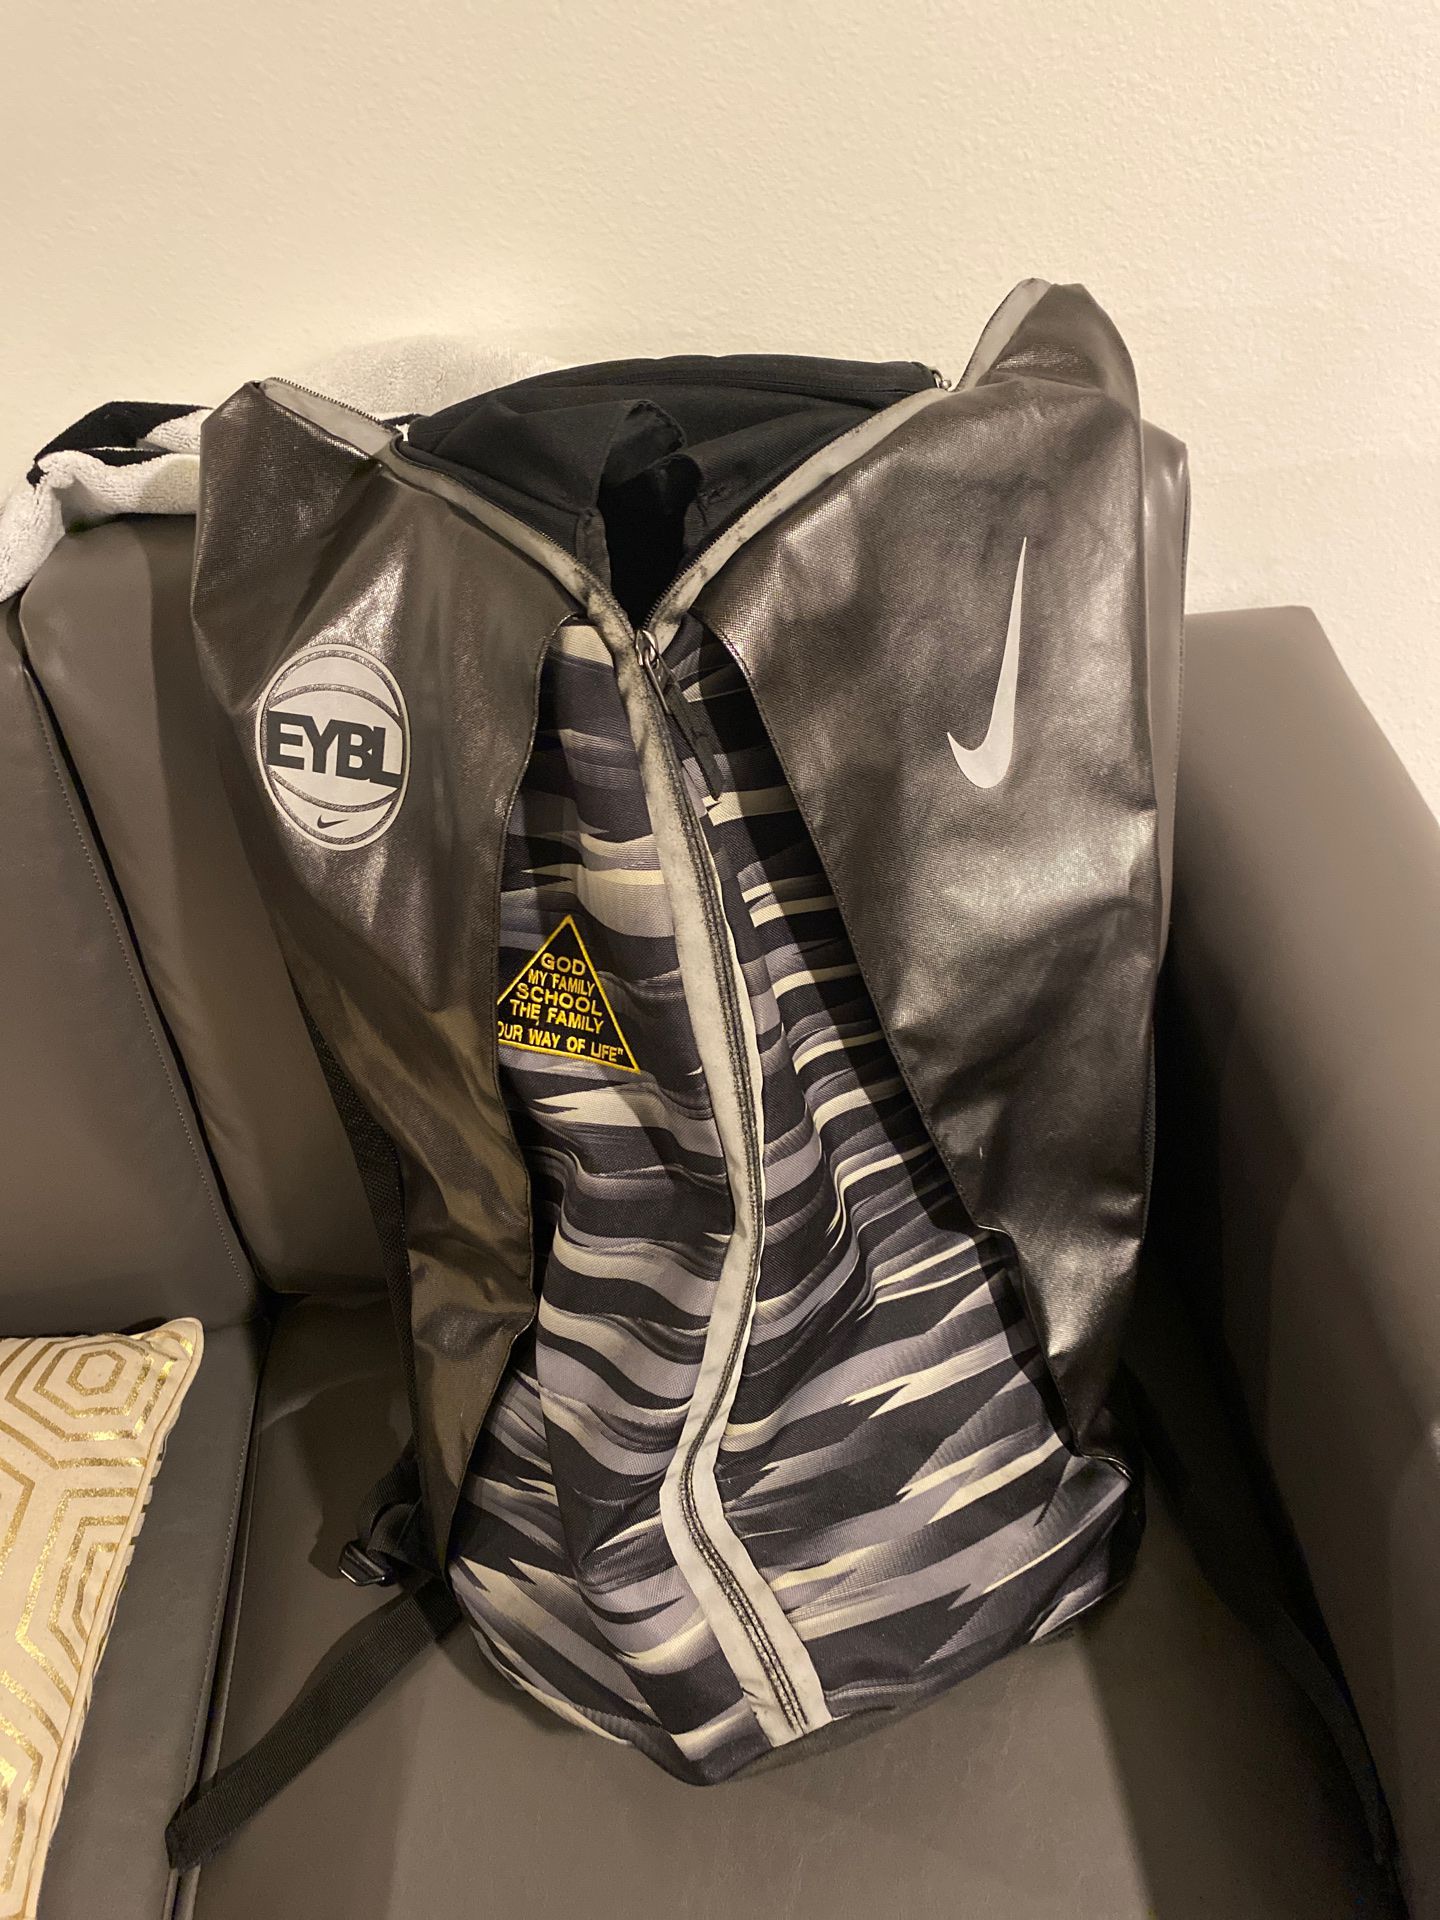 Nike EYBL Exclusive Backpack